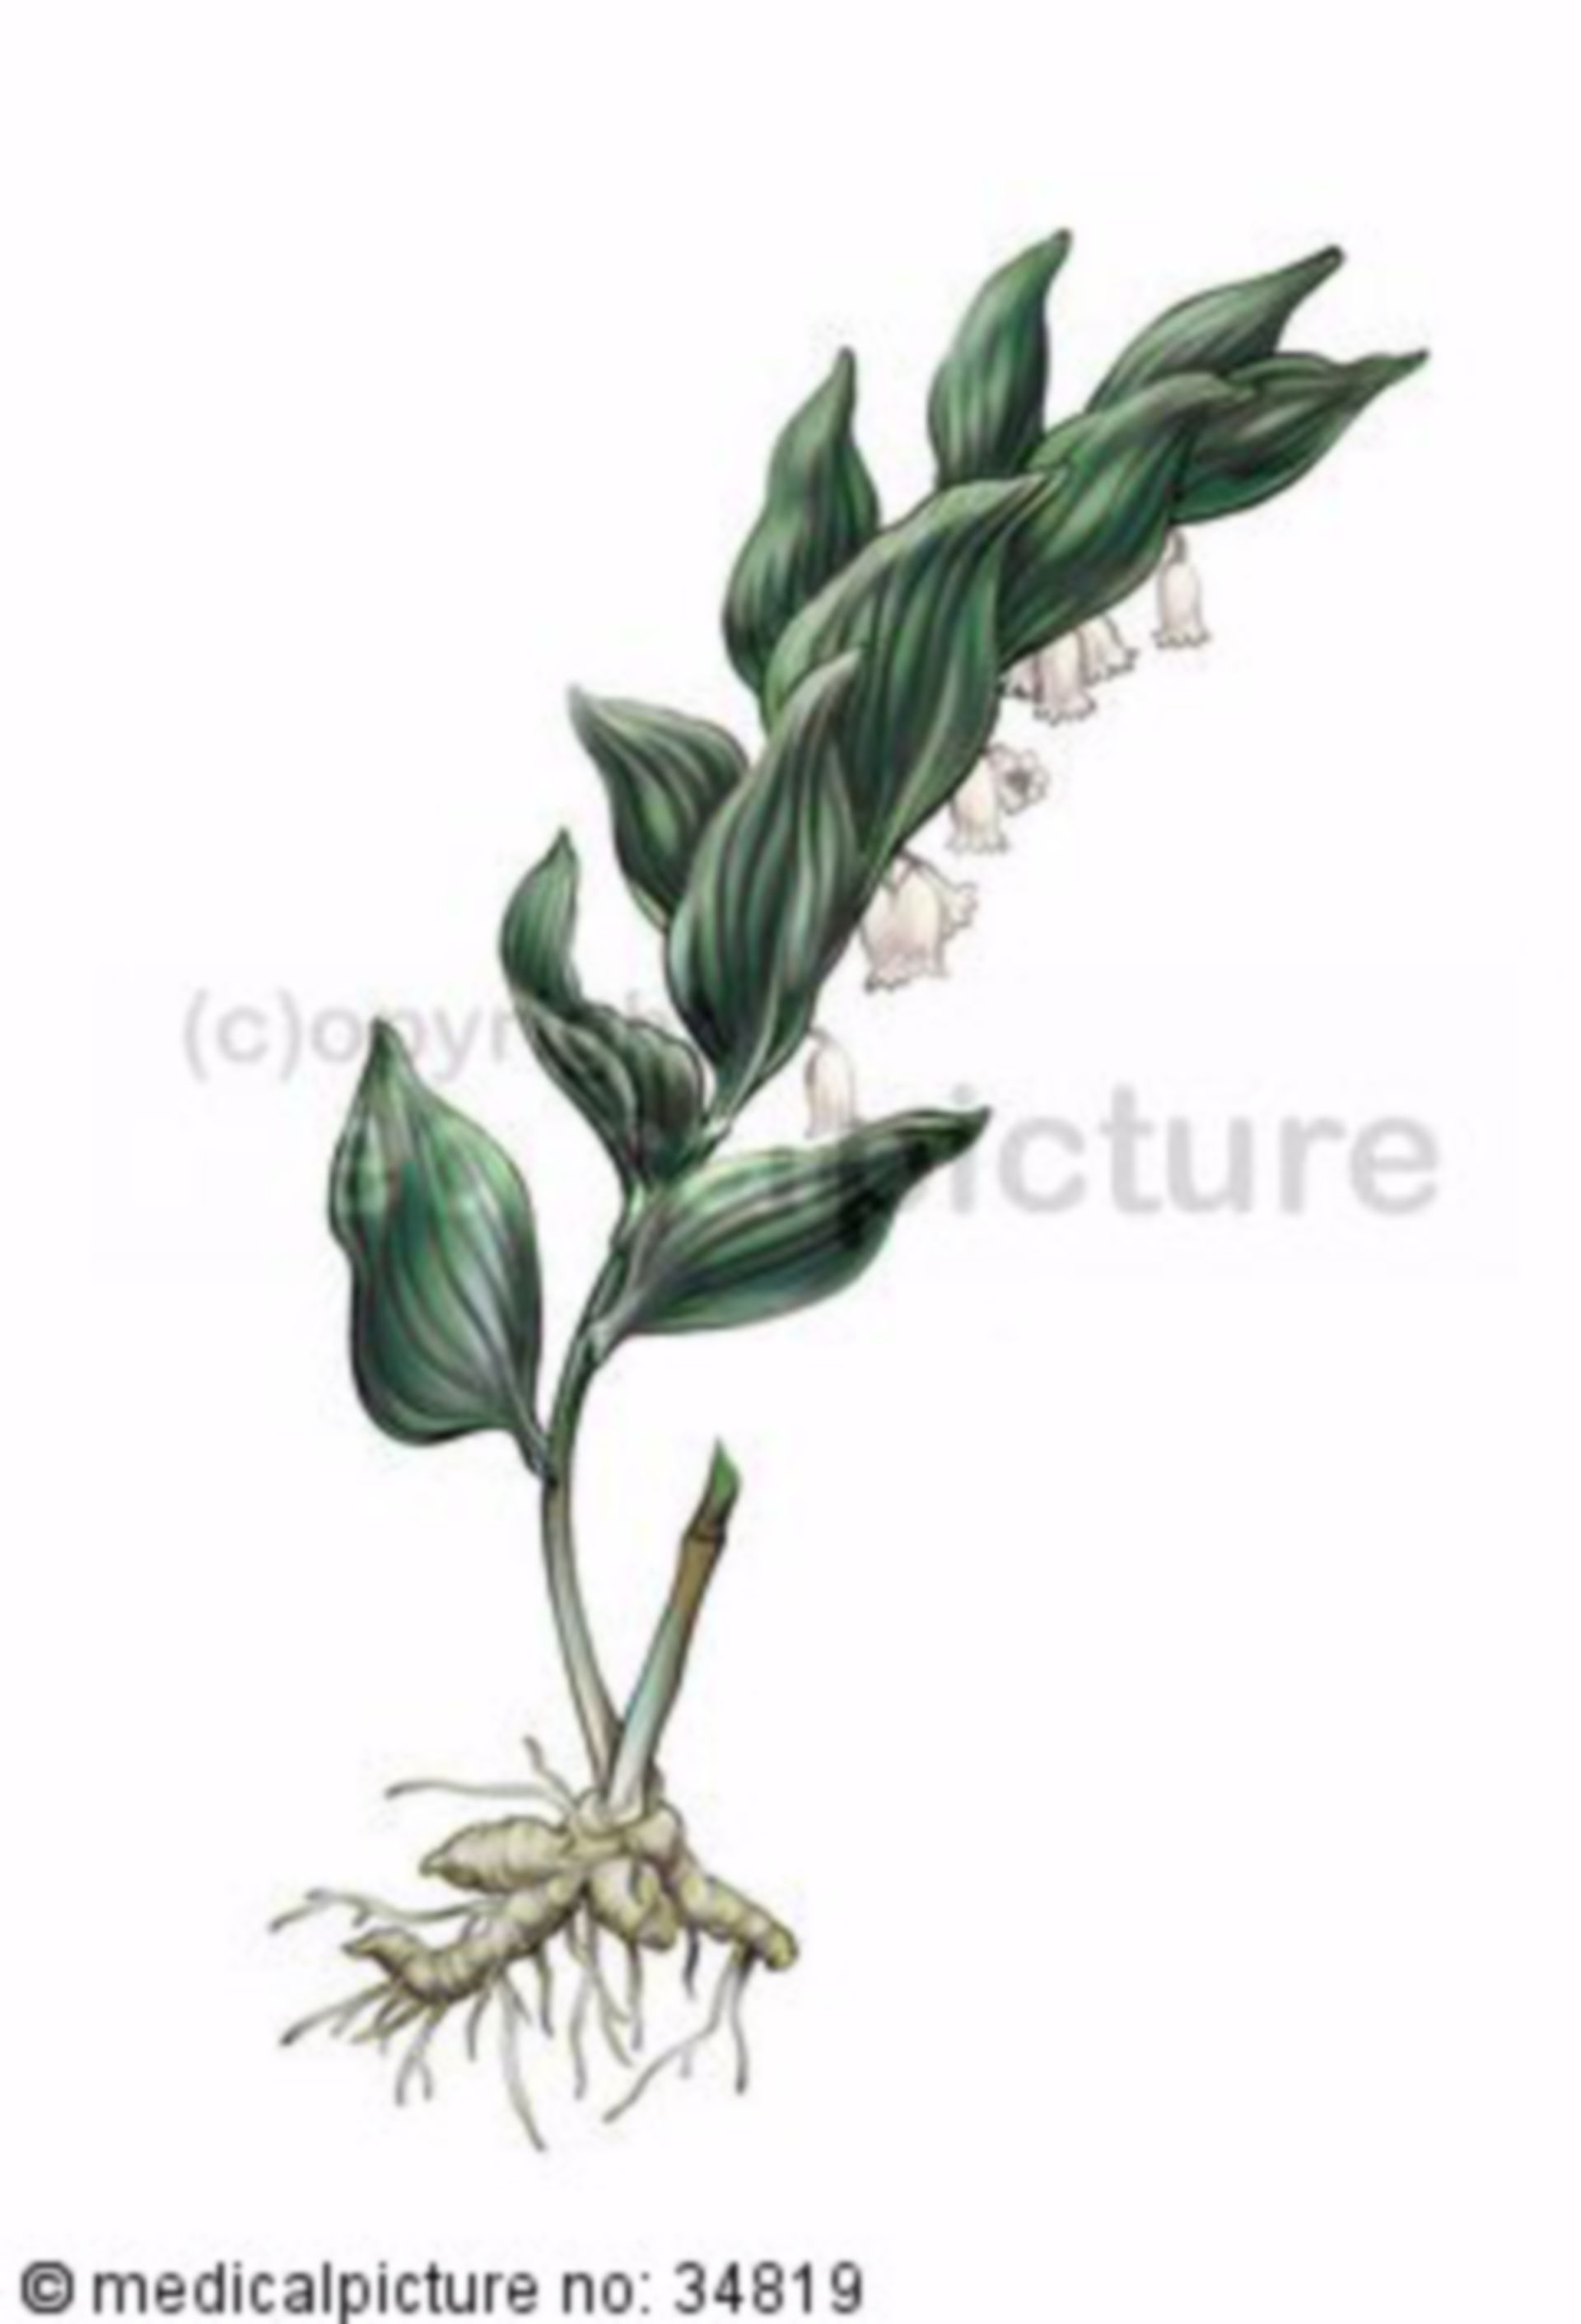  Salomonsiegel, Polygonatum odoratum 
